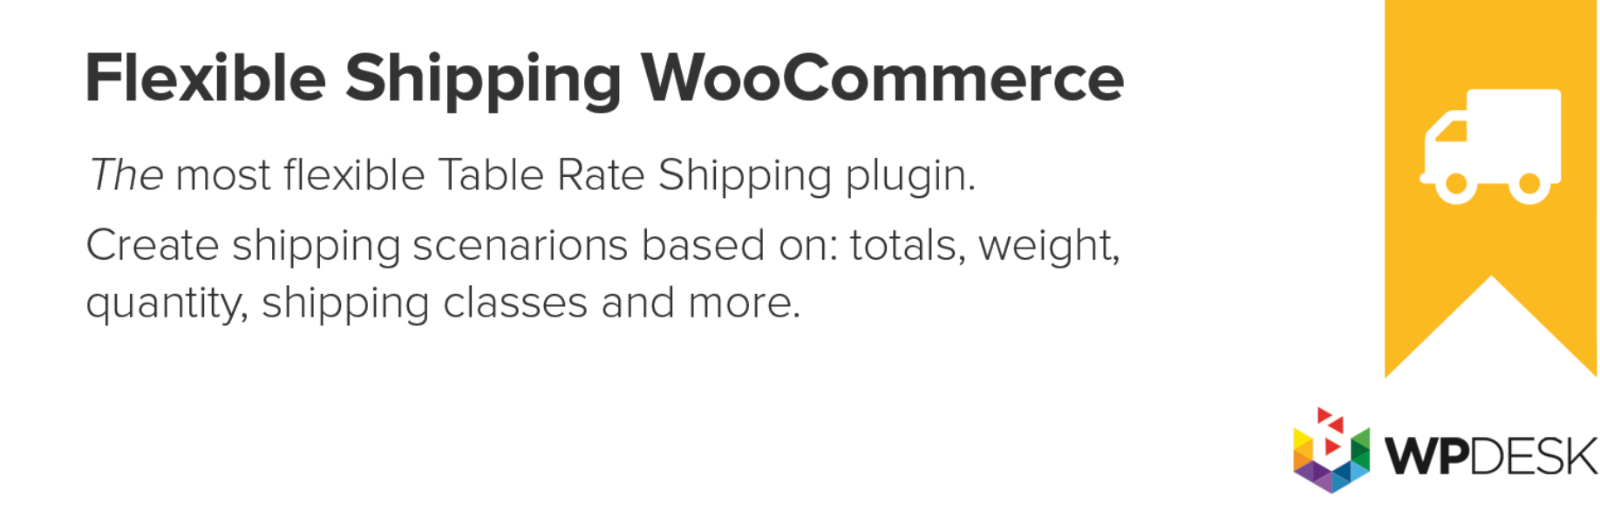 Flexible Shipping WooCommerce